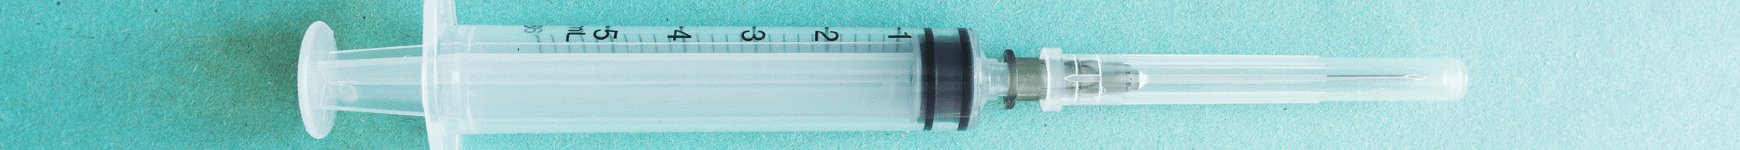 18 Gauge Needle with Syringe